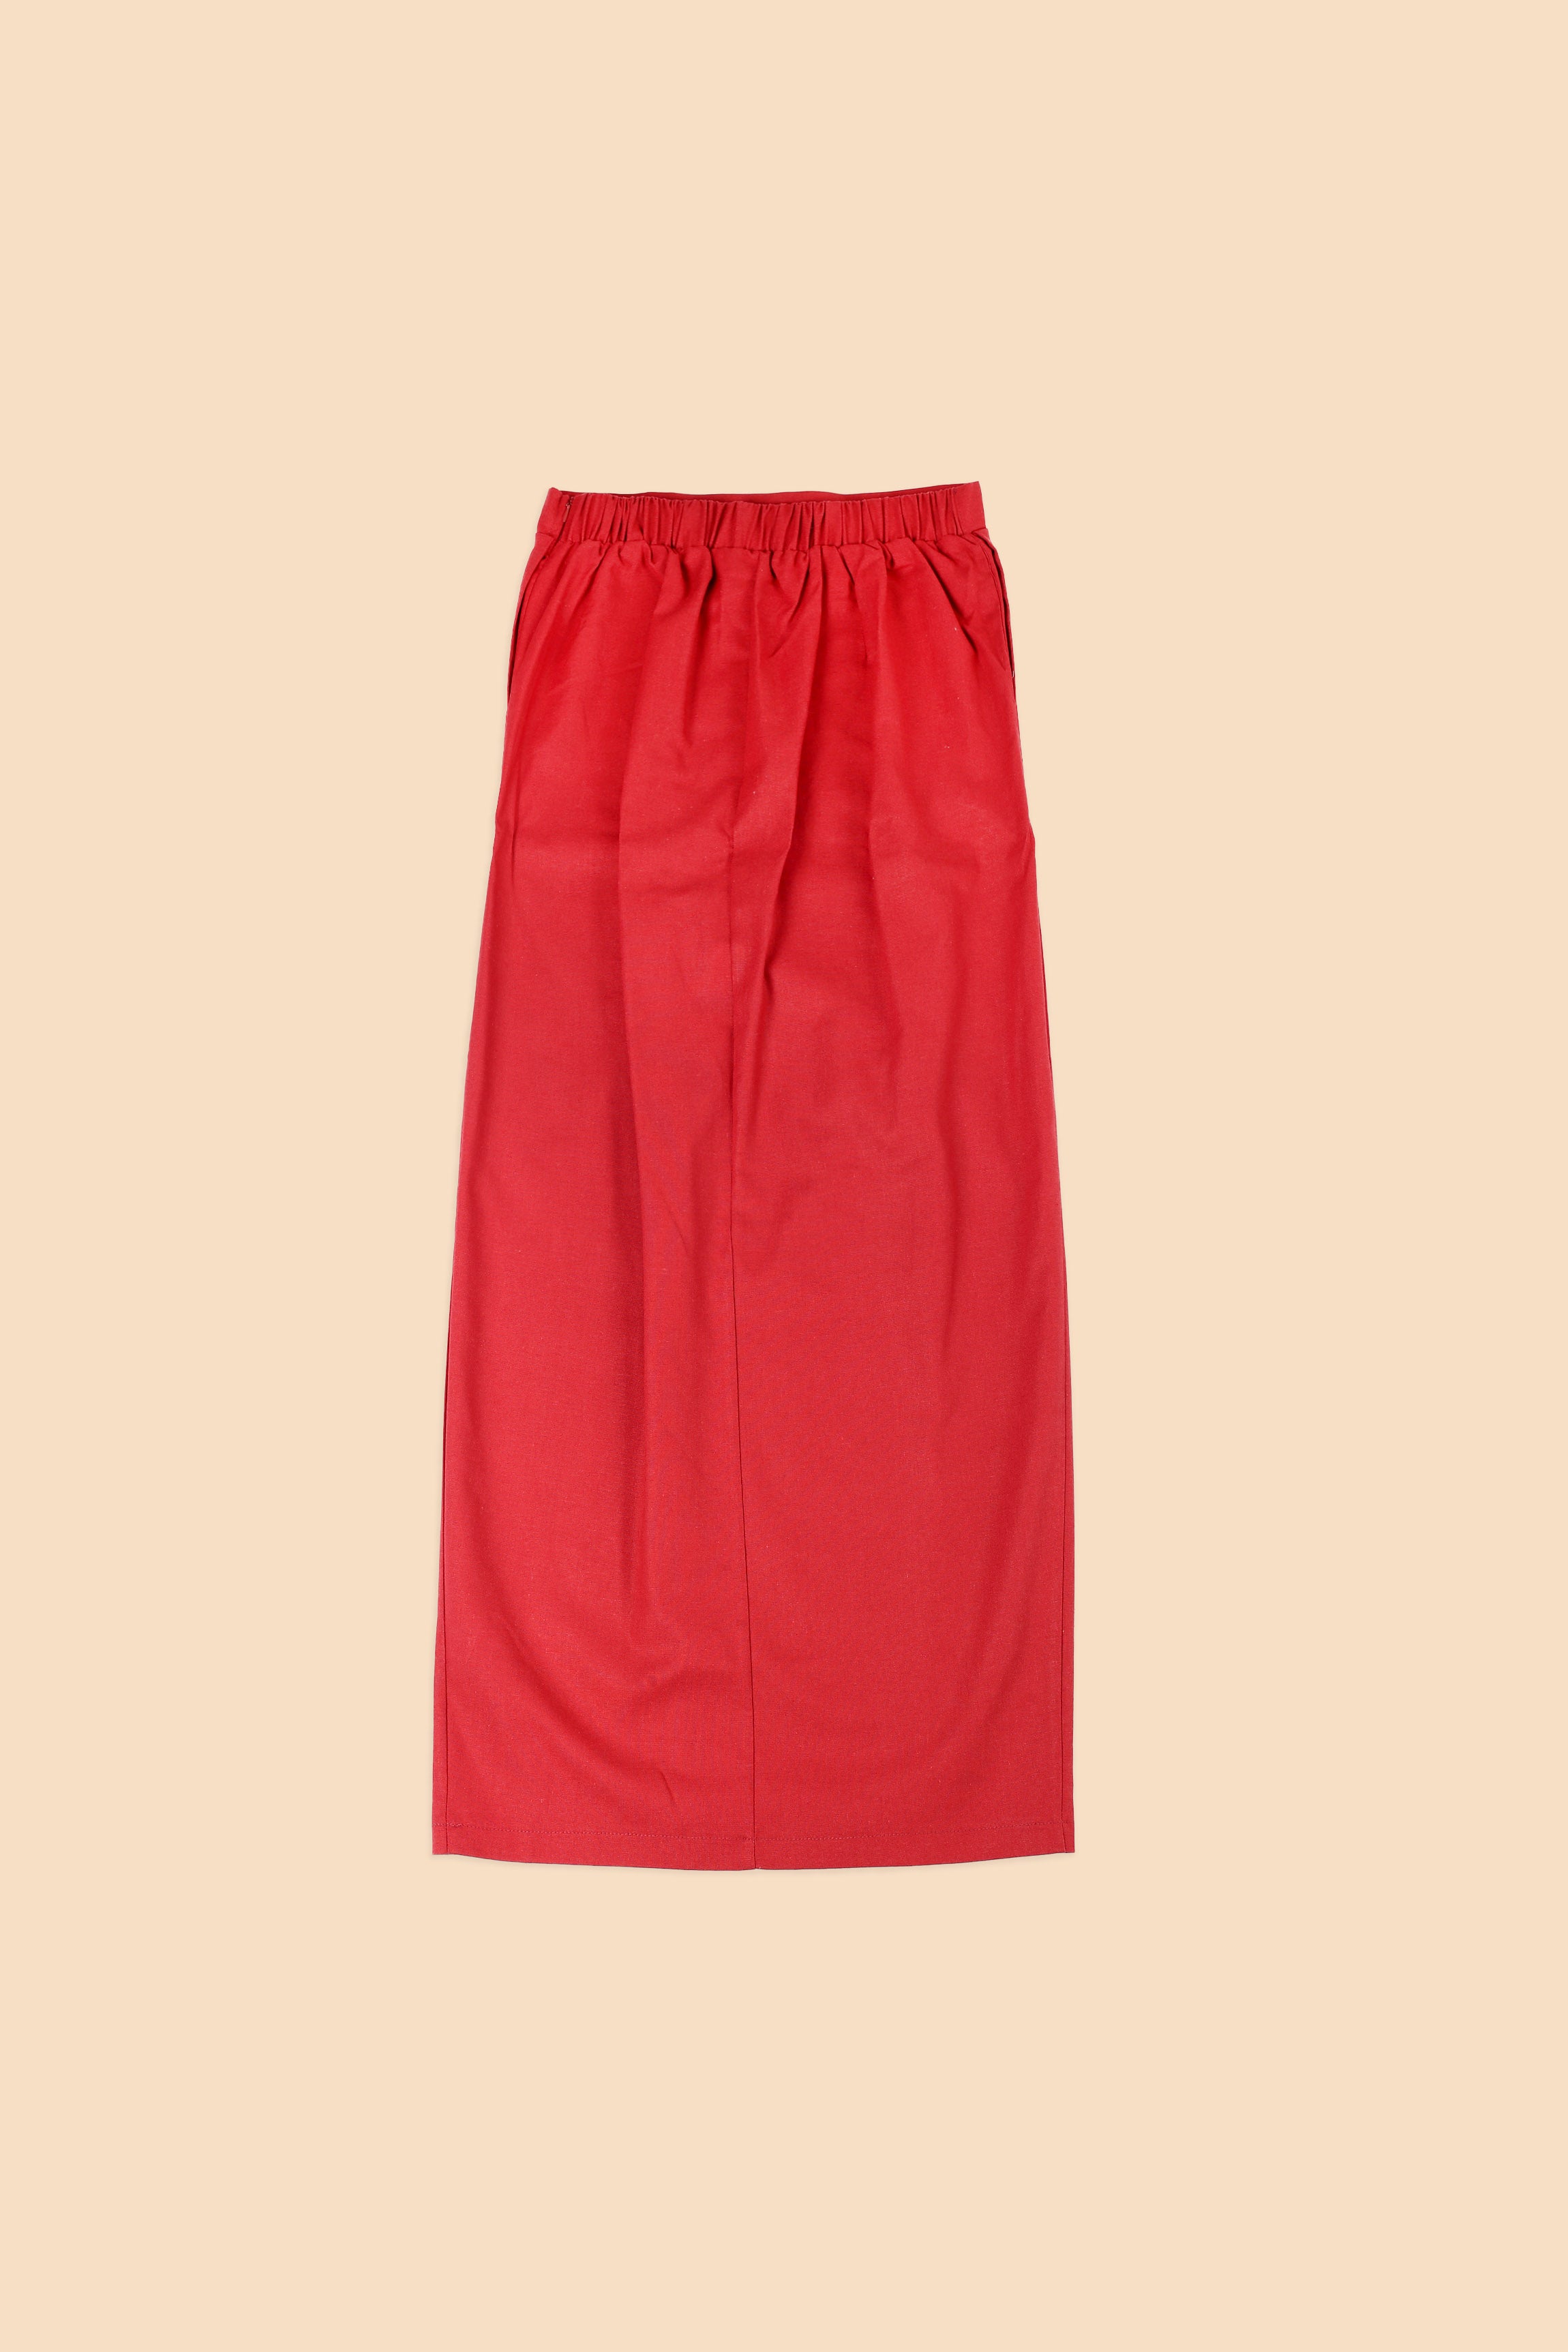 The Nostalgia Women Classic Skirt Red